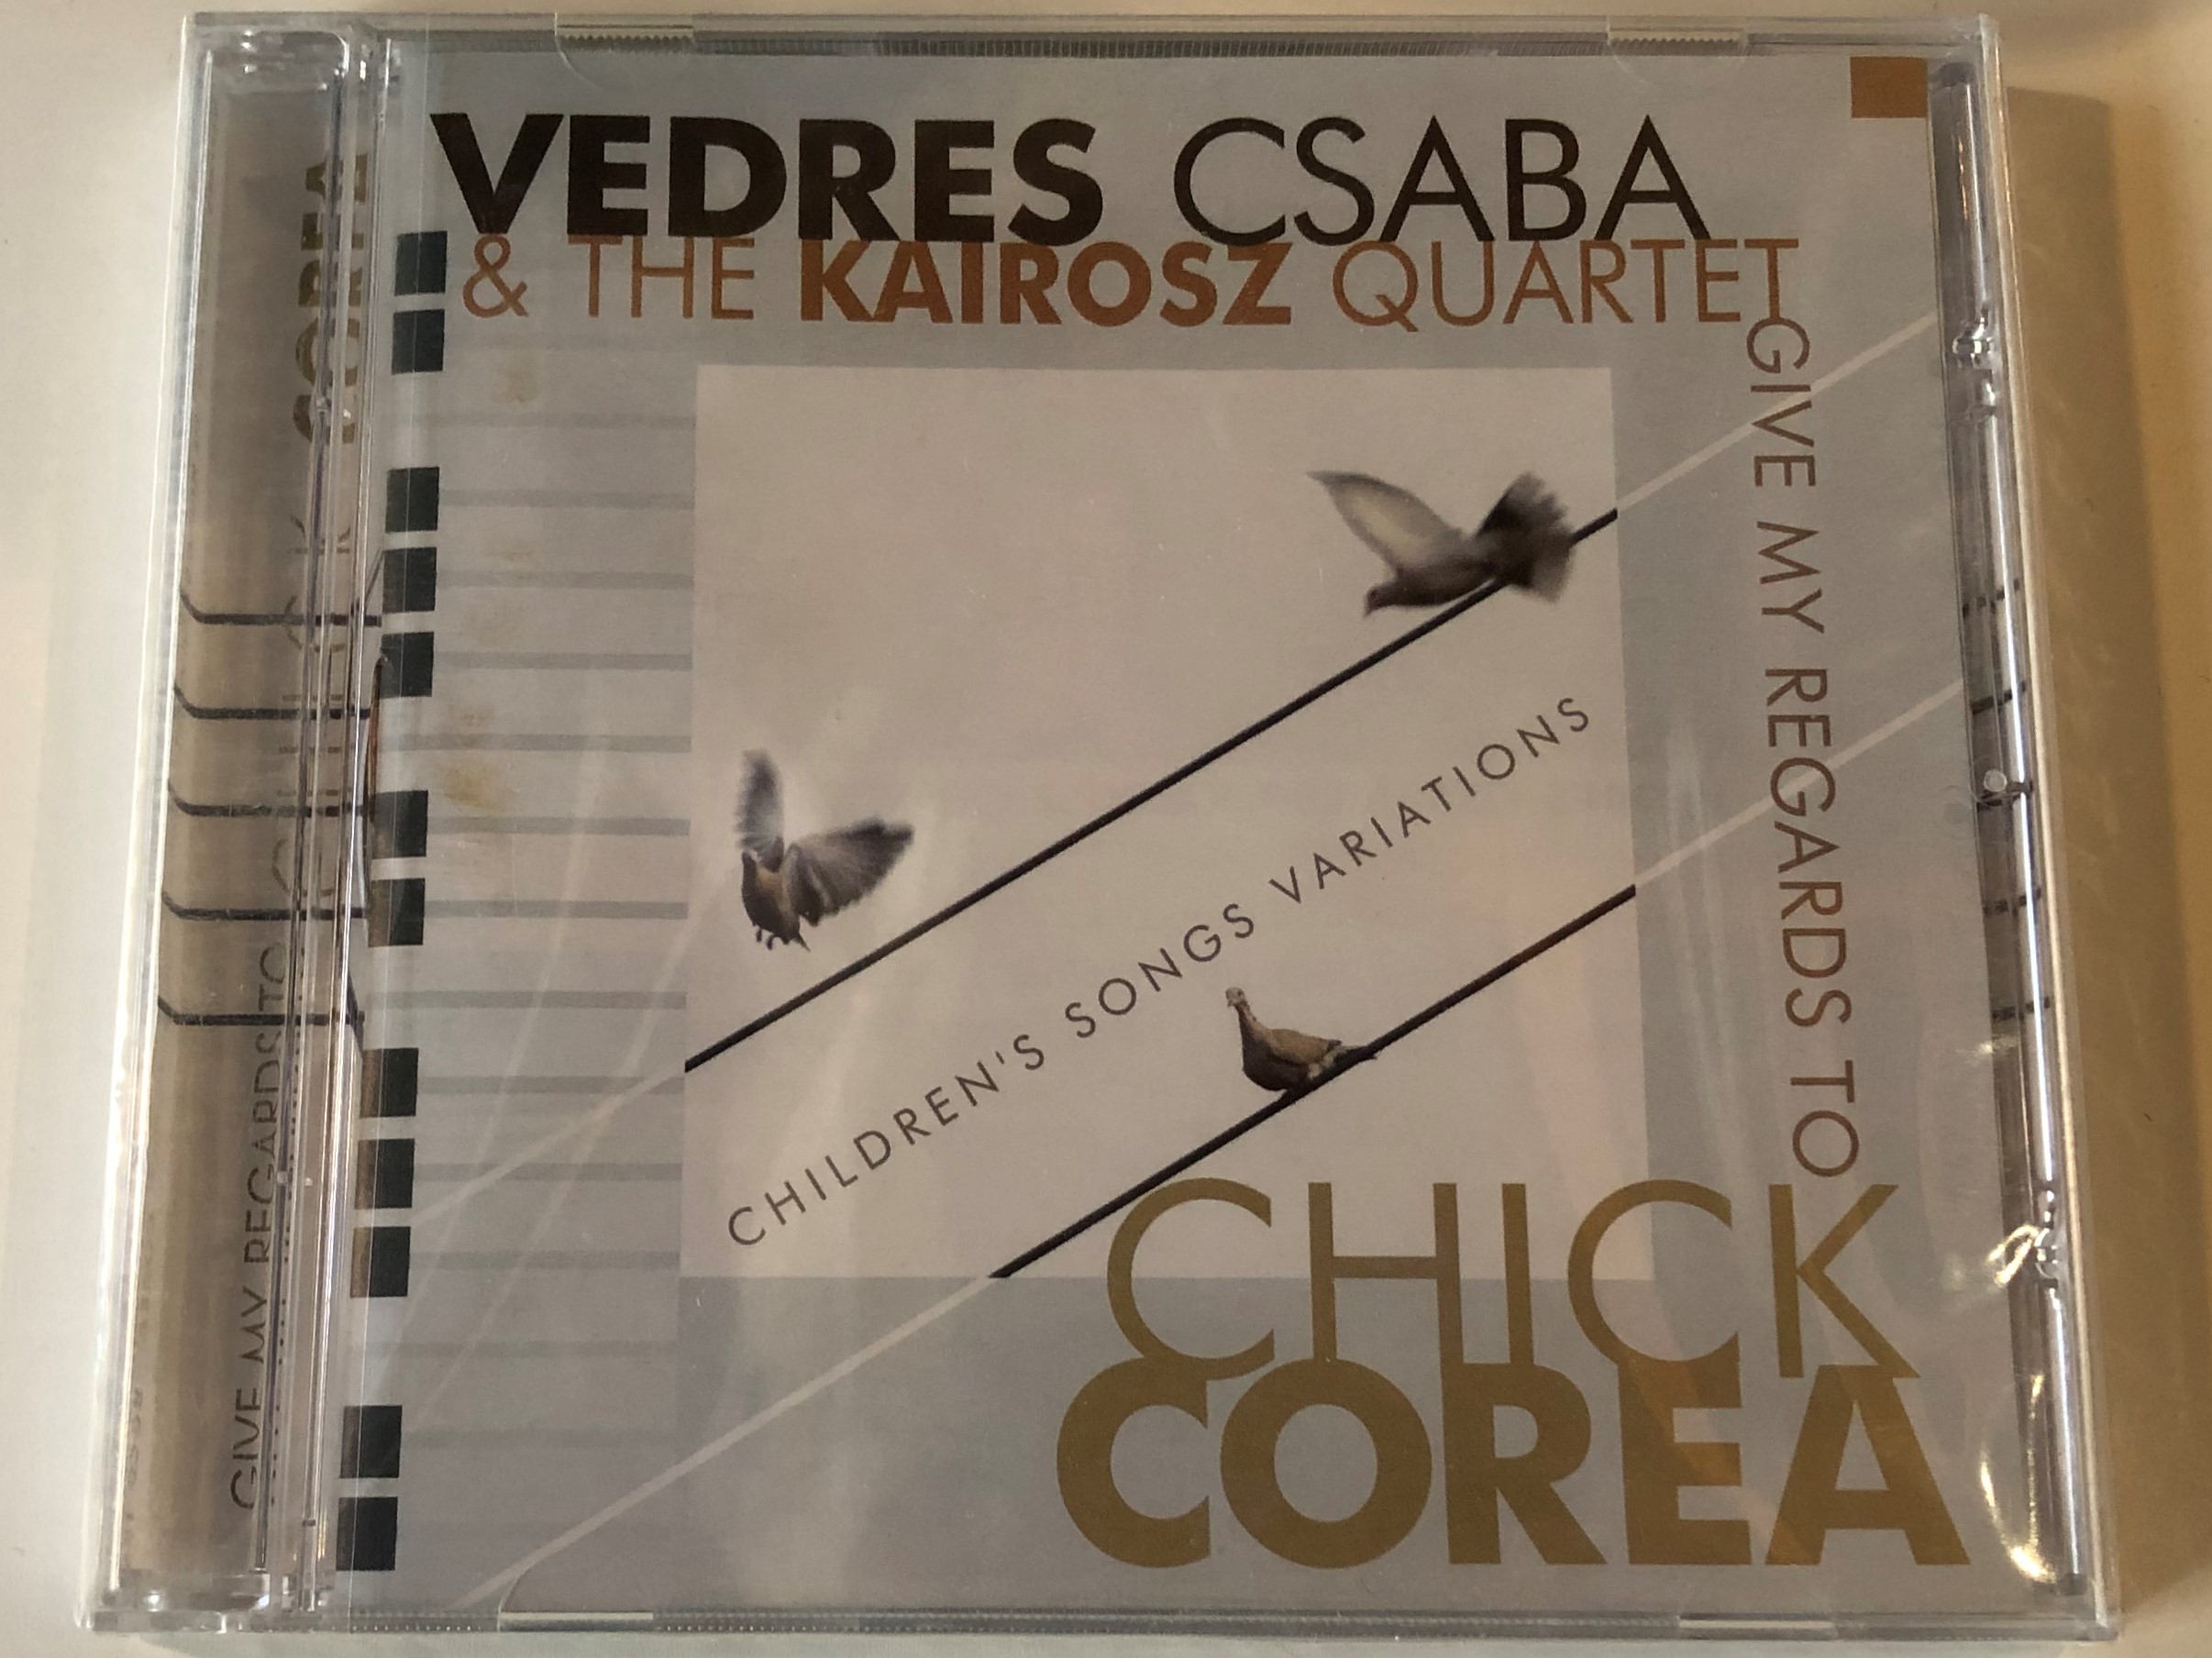 vedres-csaba-the-kairosz-quartet-give-my-regards-to-chick-corea-children-s-songs-variations-periferic-records-audio-cd-2006-bgcd-186-1-.jpg